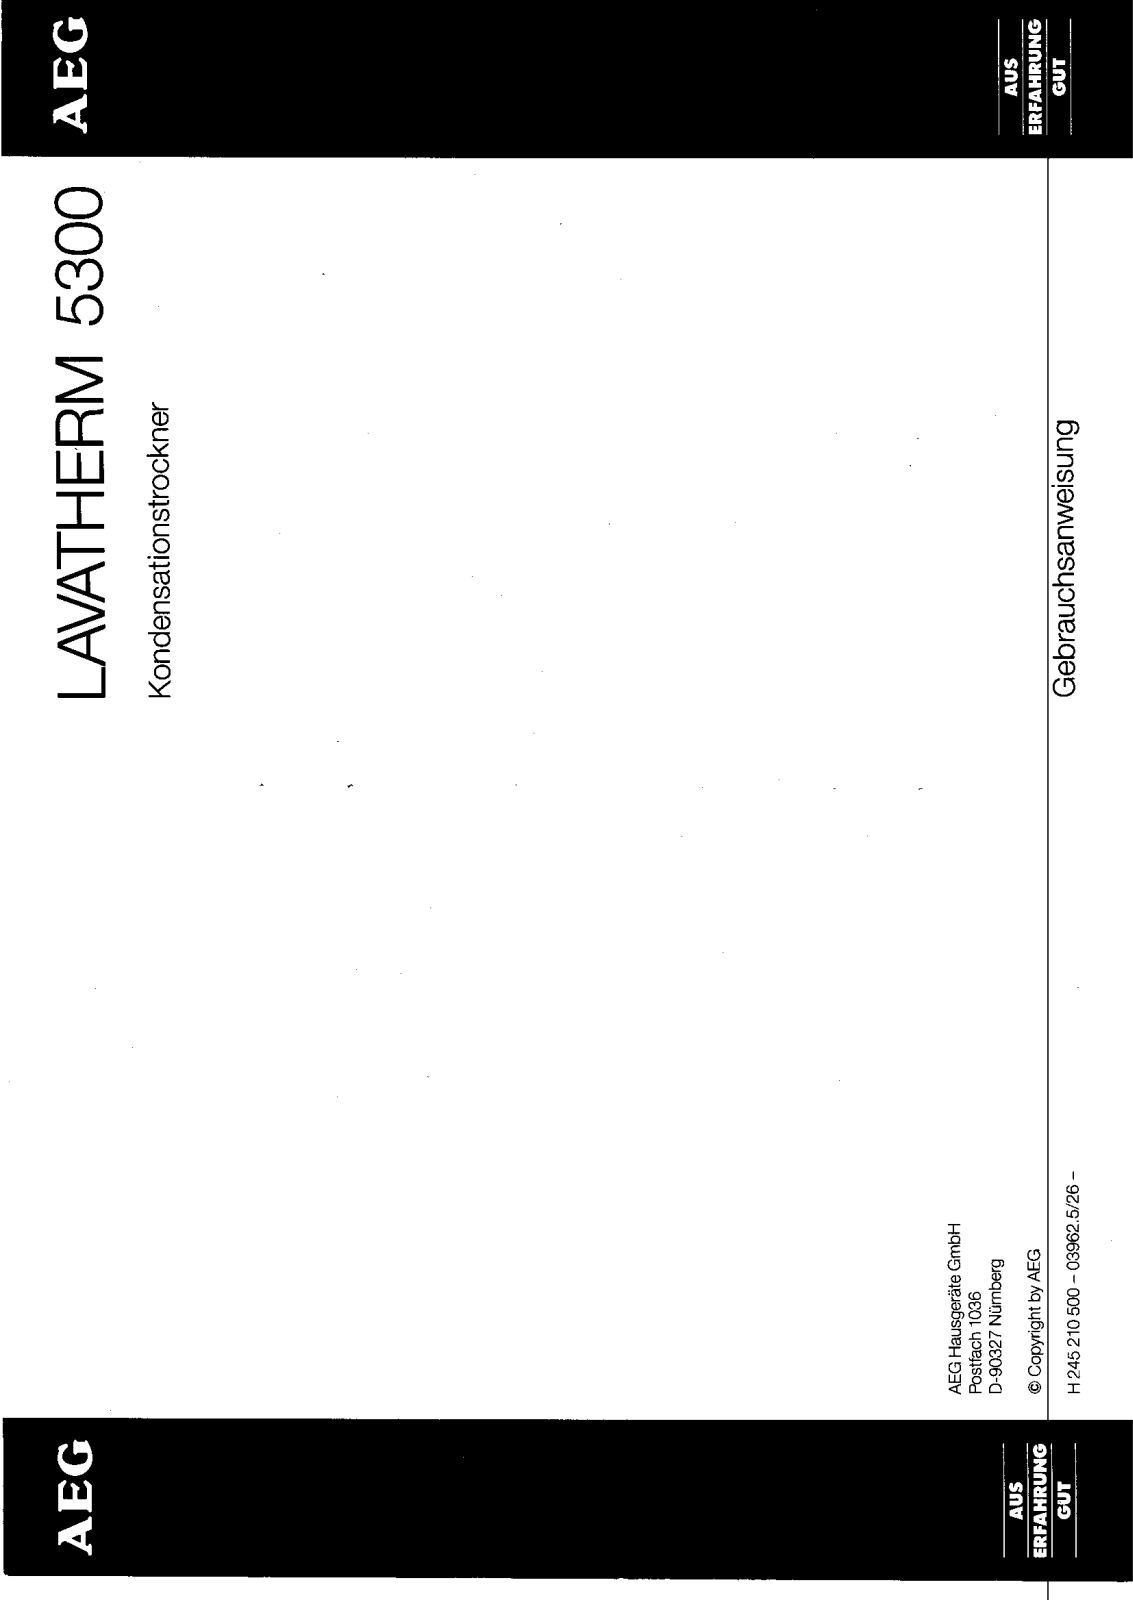 AEG LAVATHERM 5300 User Manual